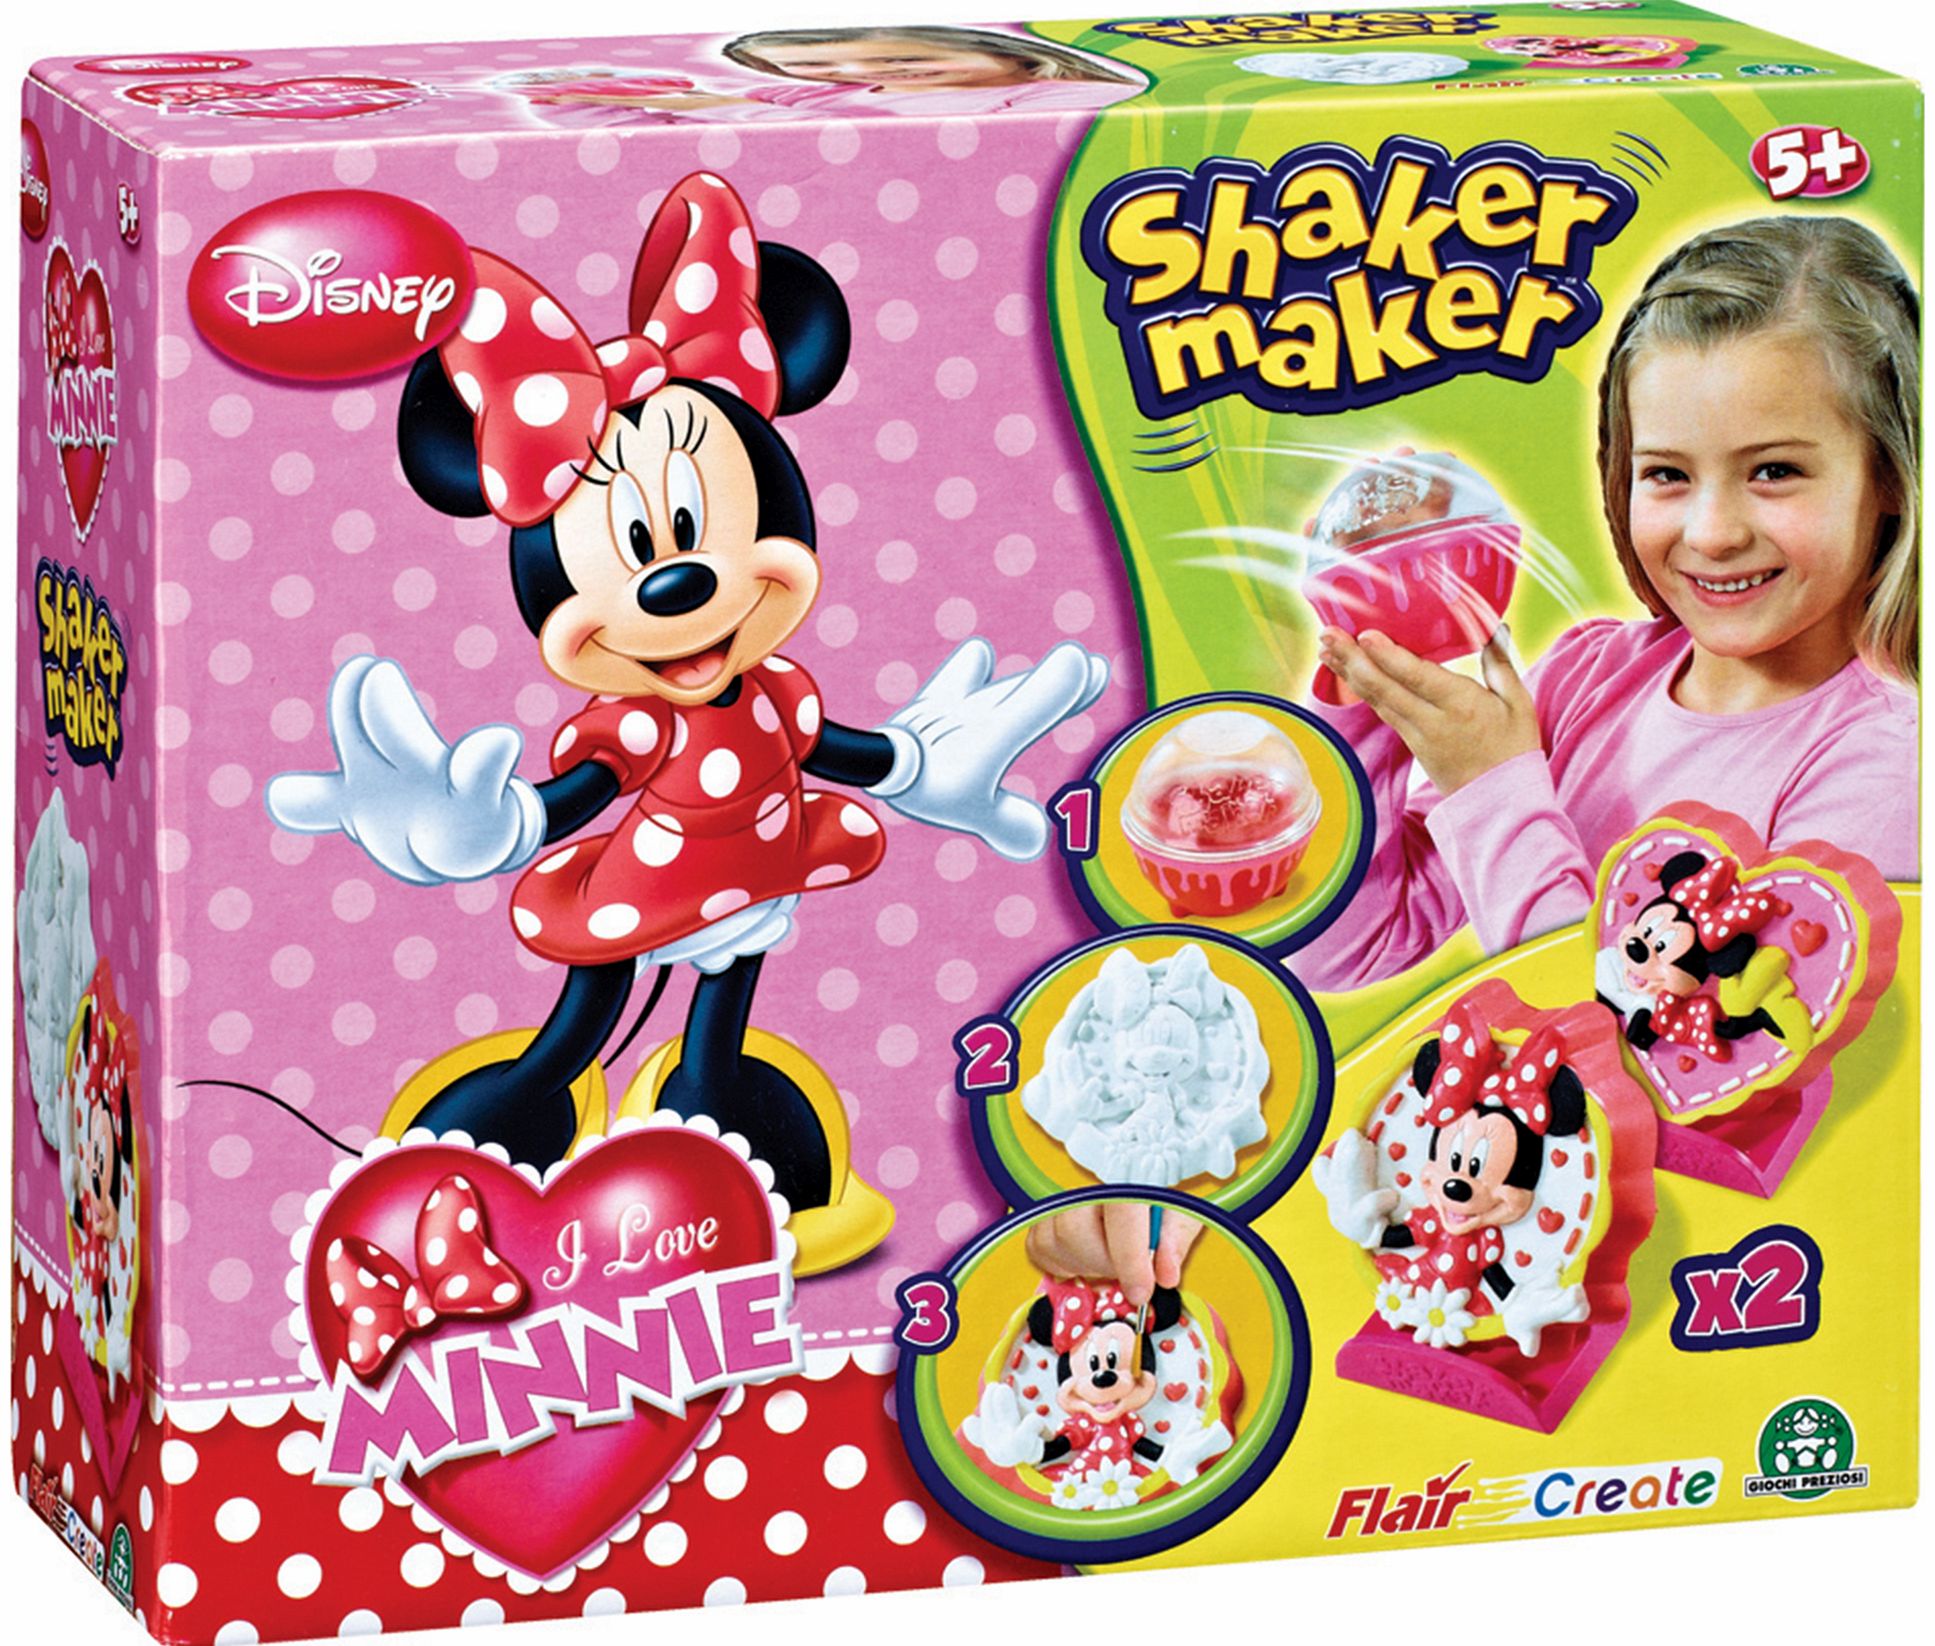 Disney Minnie Mouse Shaker Maker